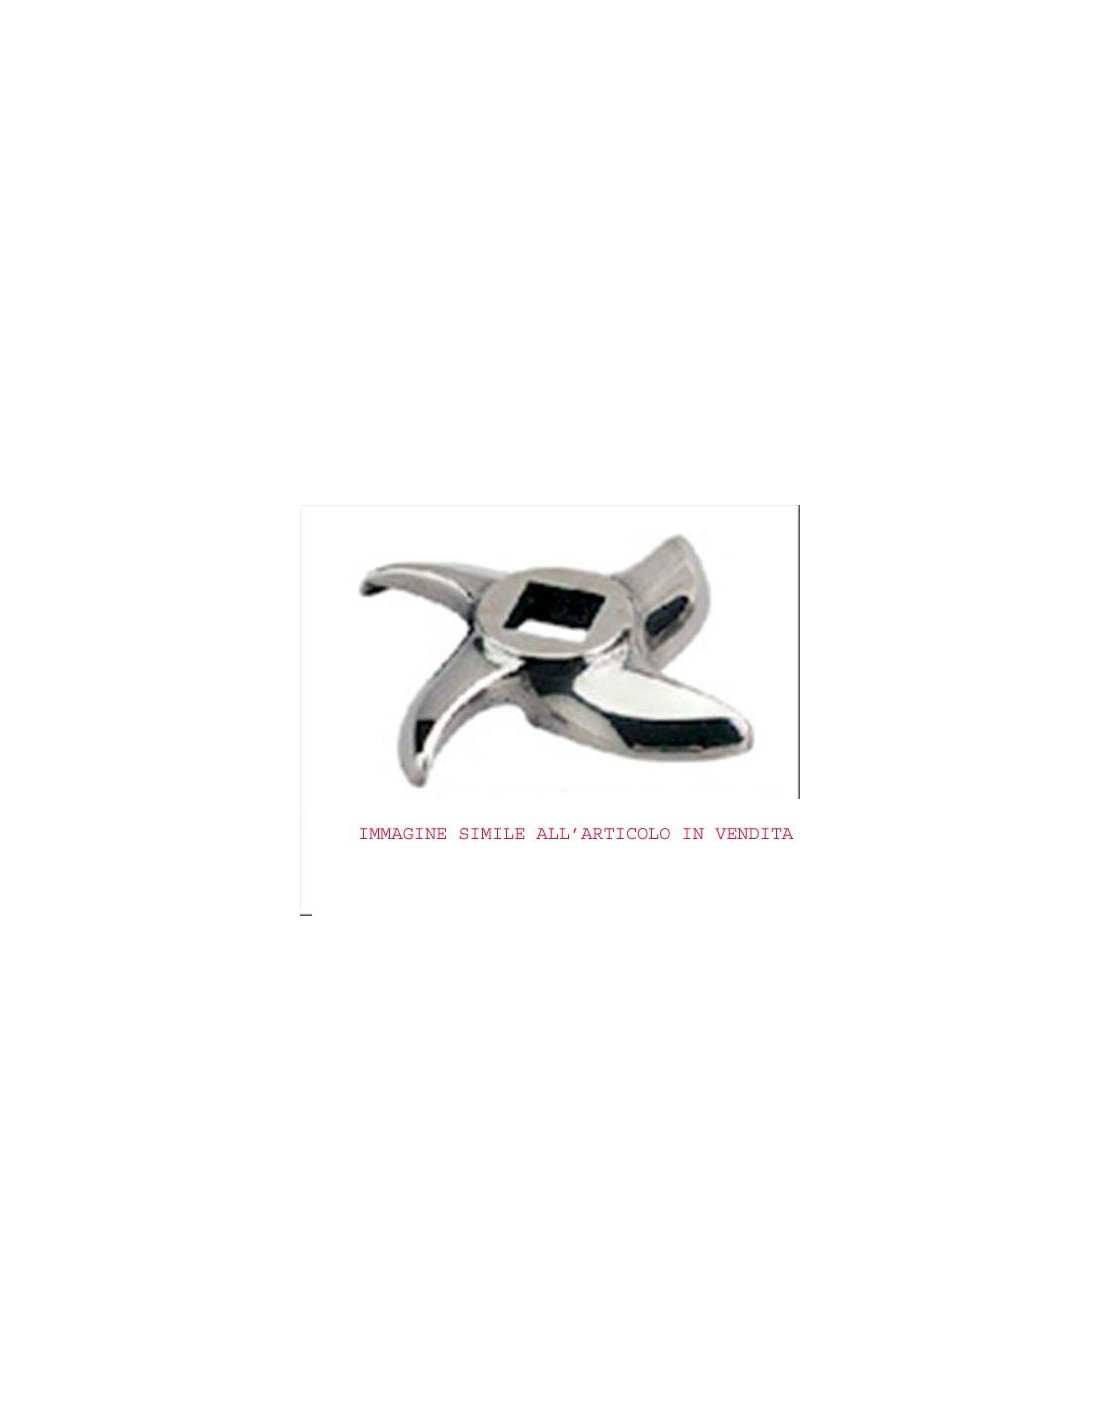 Cuchillas de acero inoxidable autoafilables (empresa) para picadora mod. 32